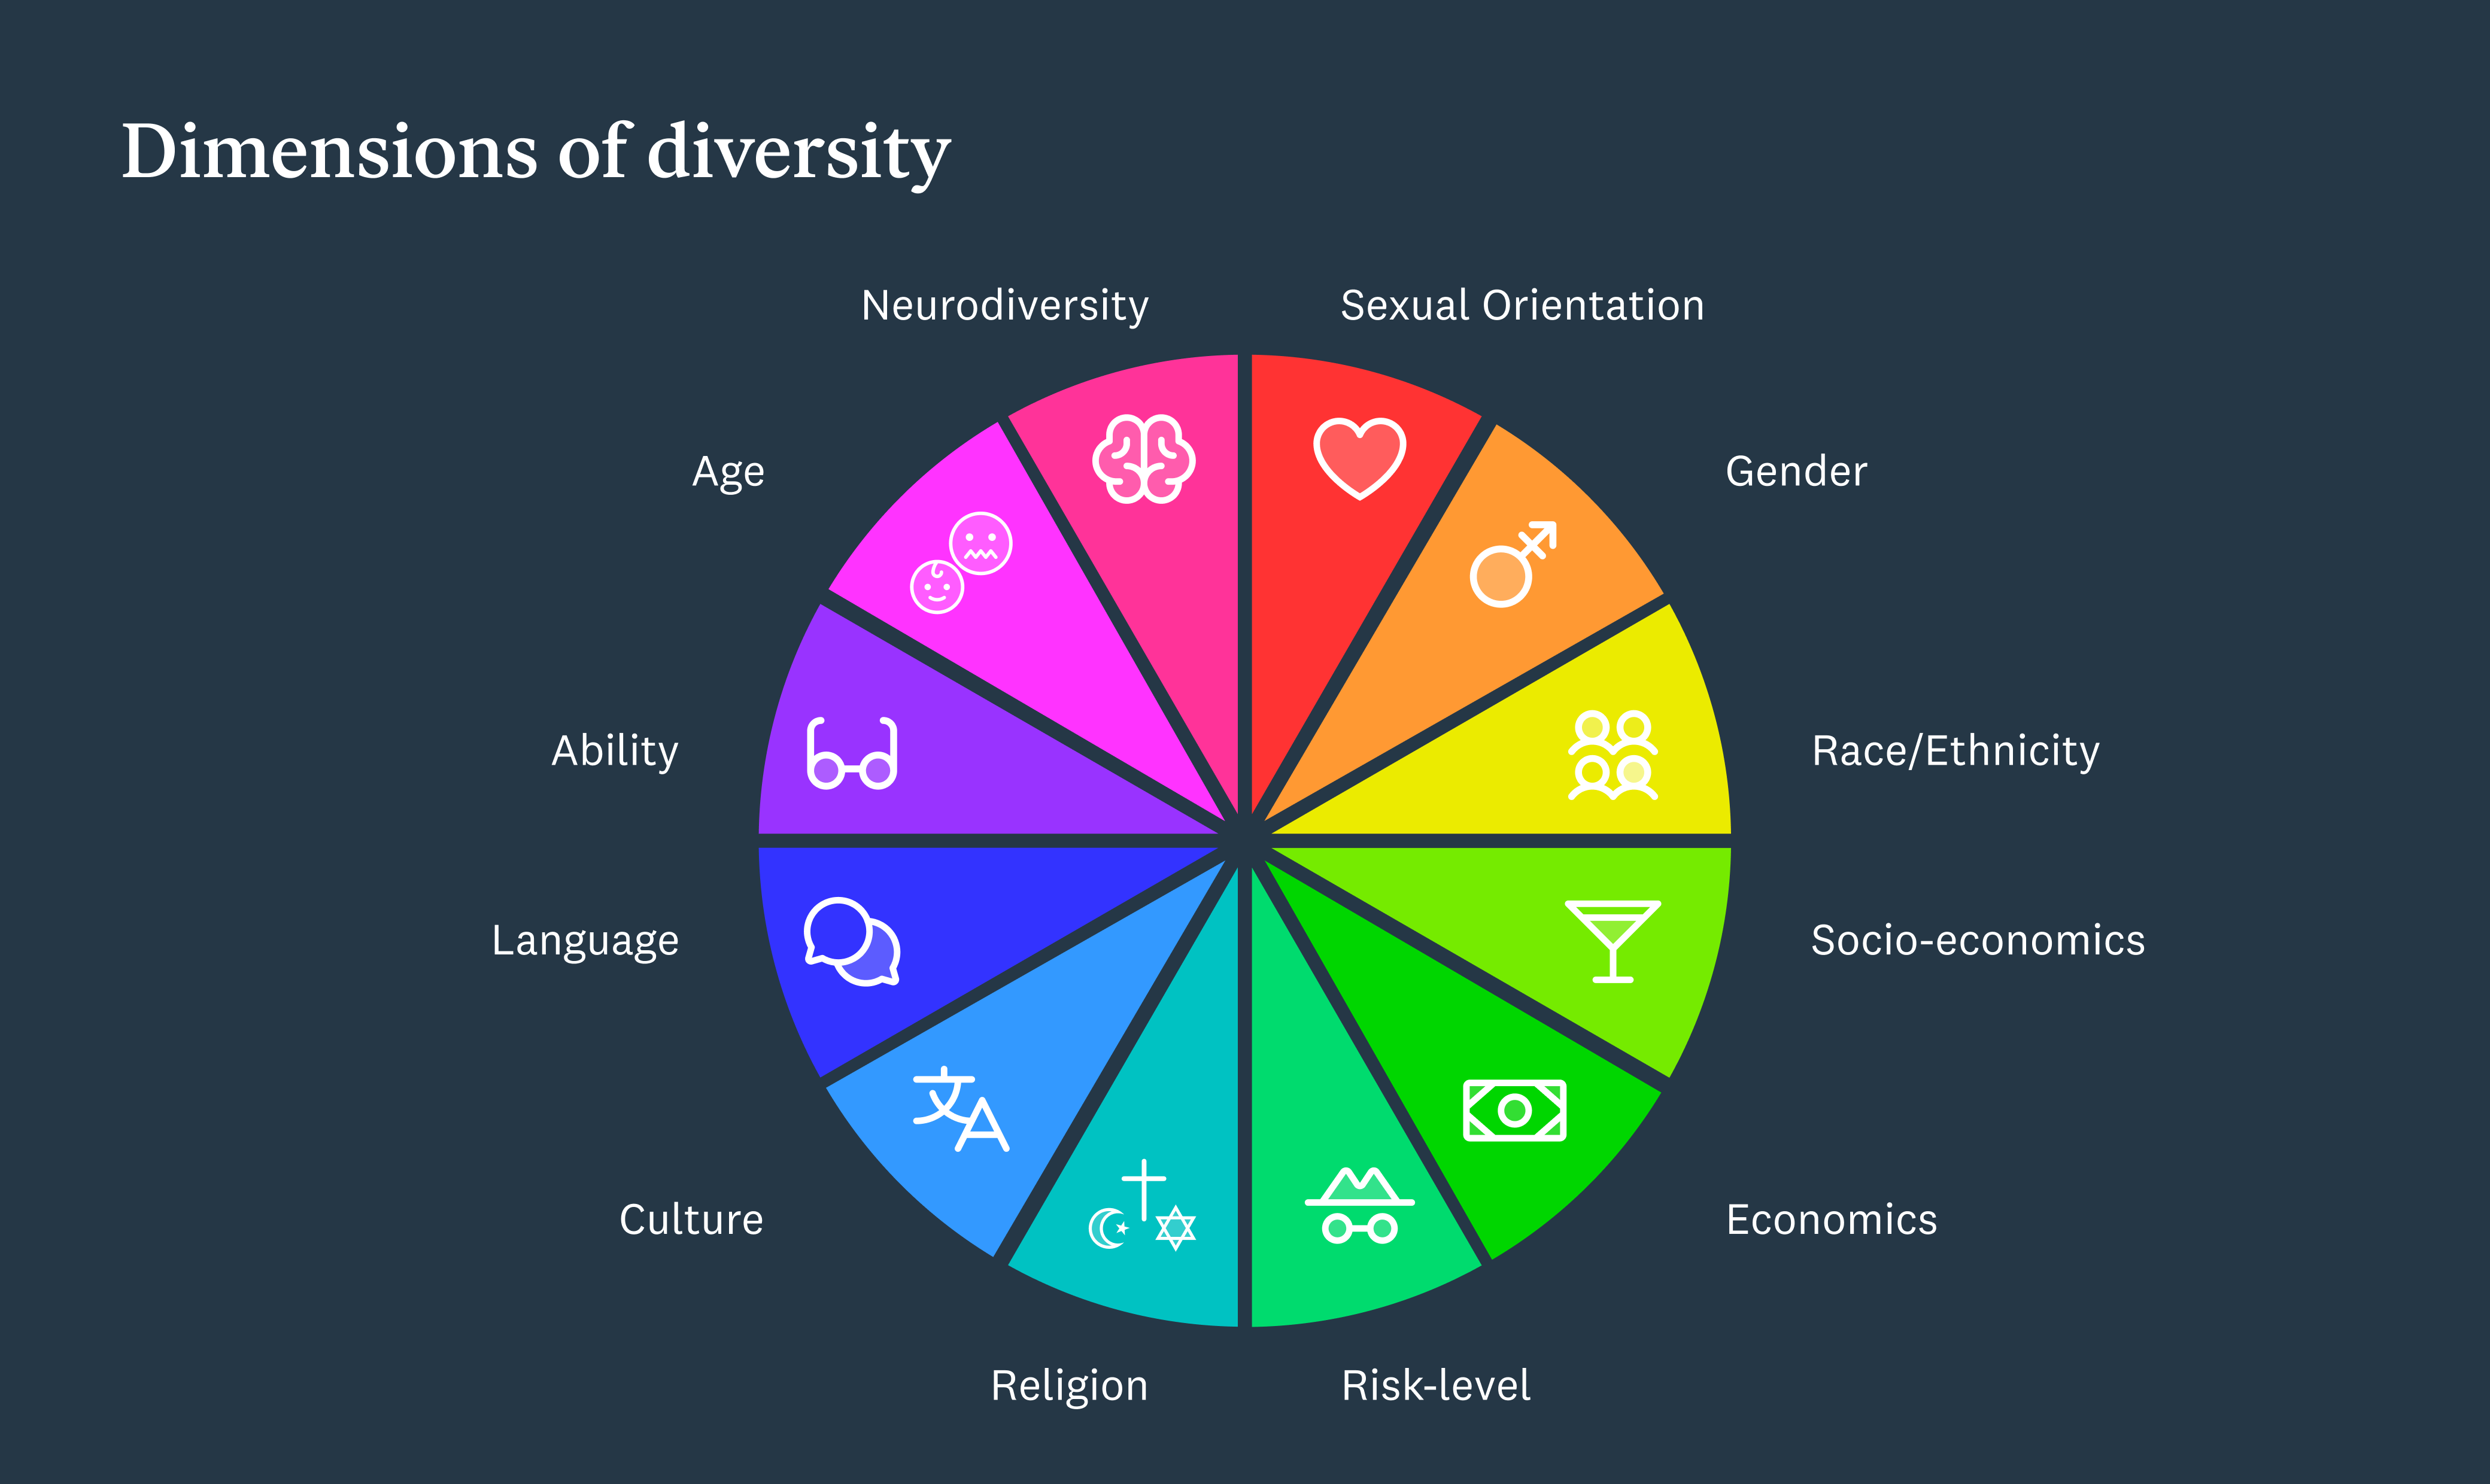 Multicolored wheel depicting the 12 dimensions of diversity: Neurodiversity, Sexual Orientation, Gender, Race/Ethnicity, Socio-economics, Economics, Risk level, Religion, Culture, Language, Ability, Age